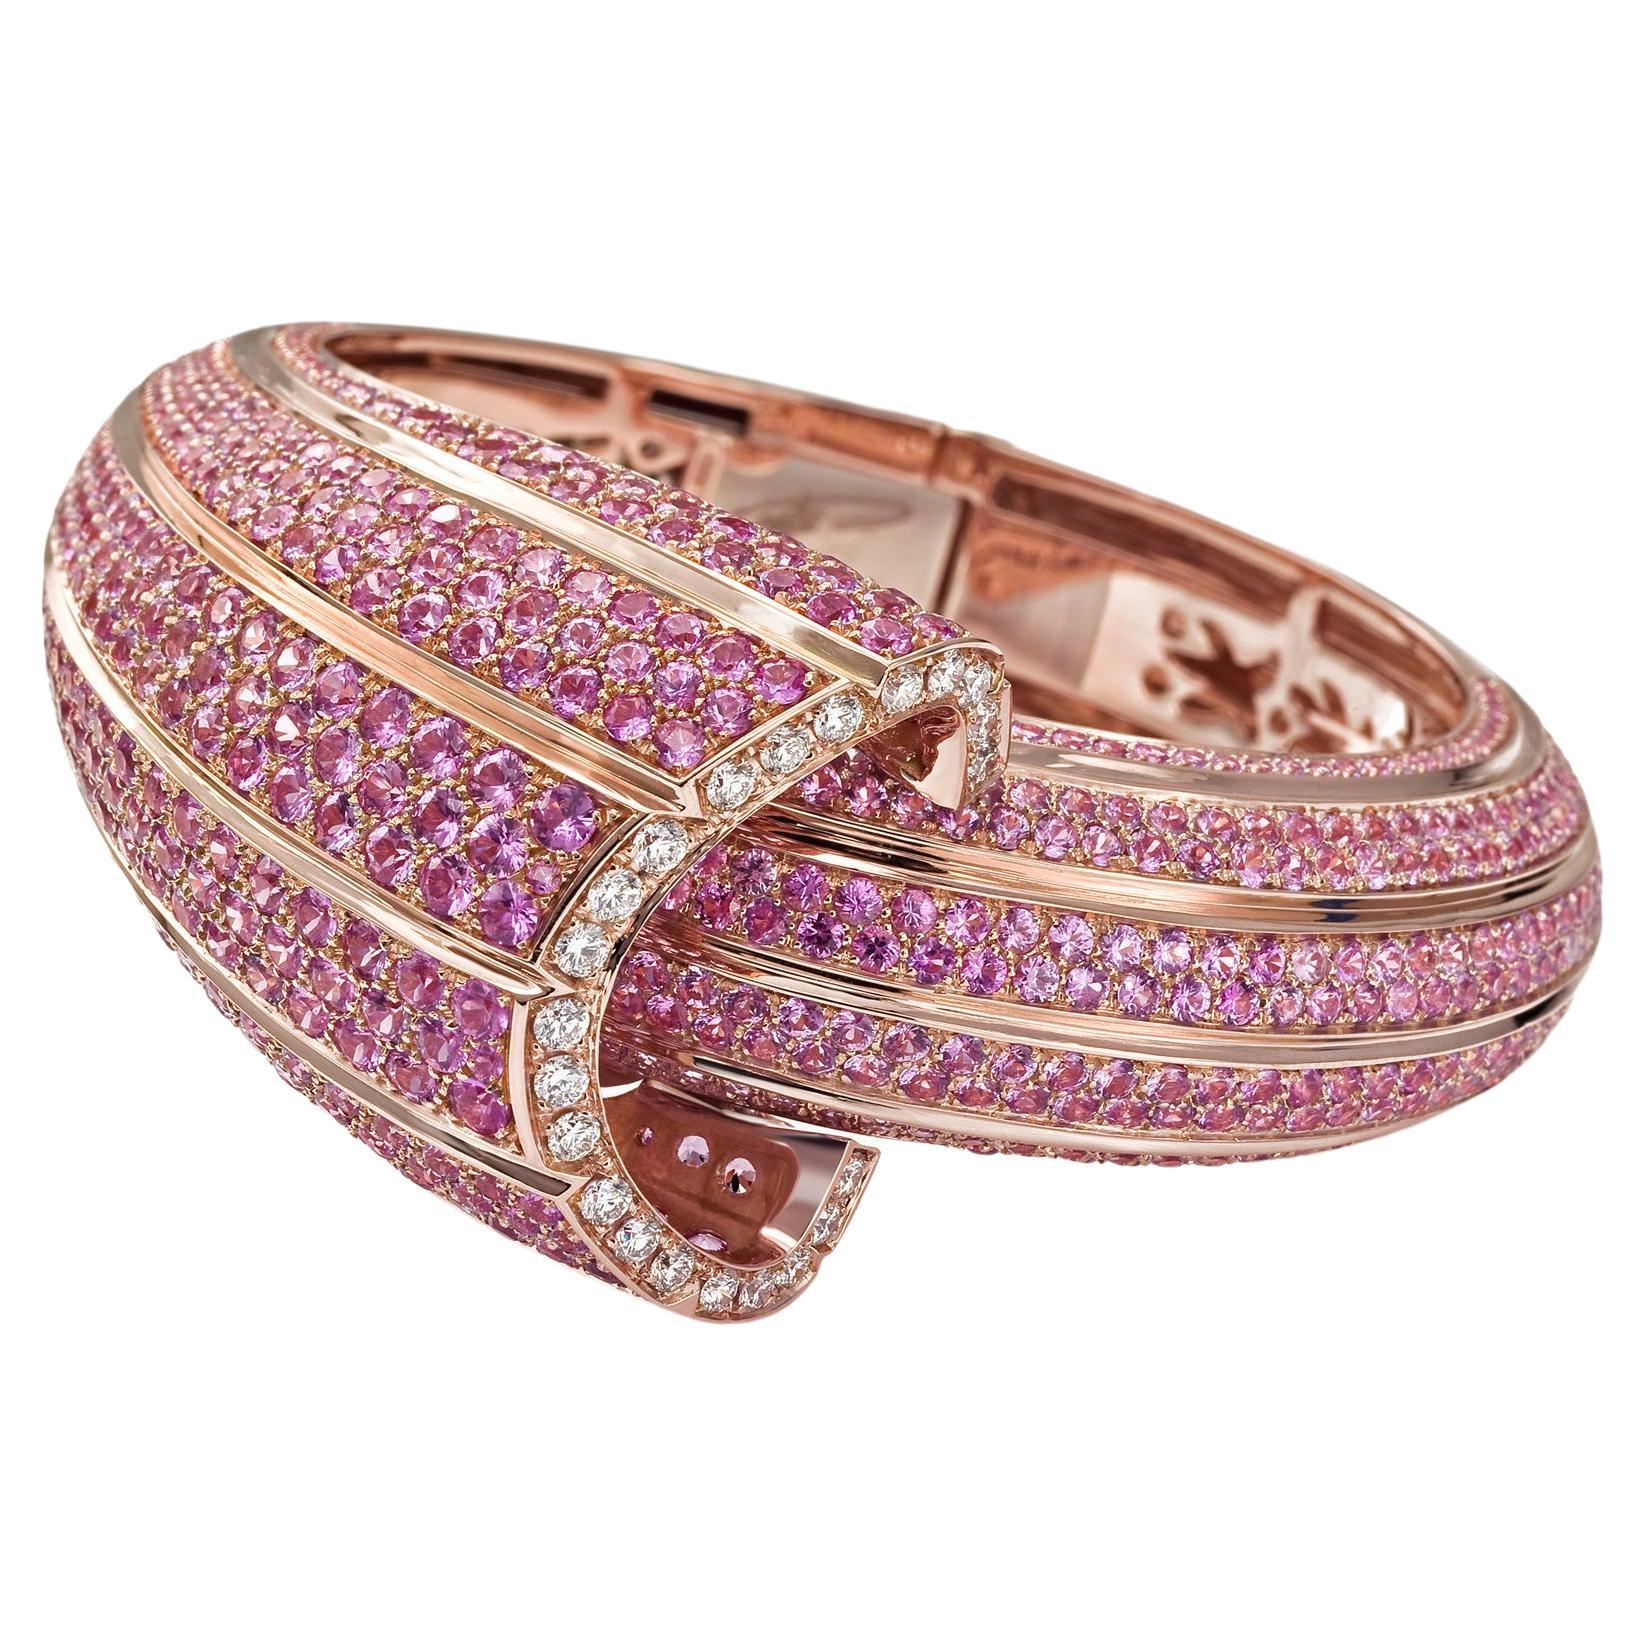 "Costis" Snail Shell Pave Bracelet - 33.81 cts Pink Sapphires, 1.22 cts Diamonds